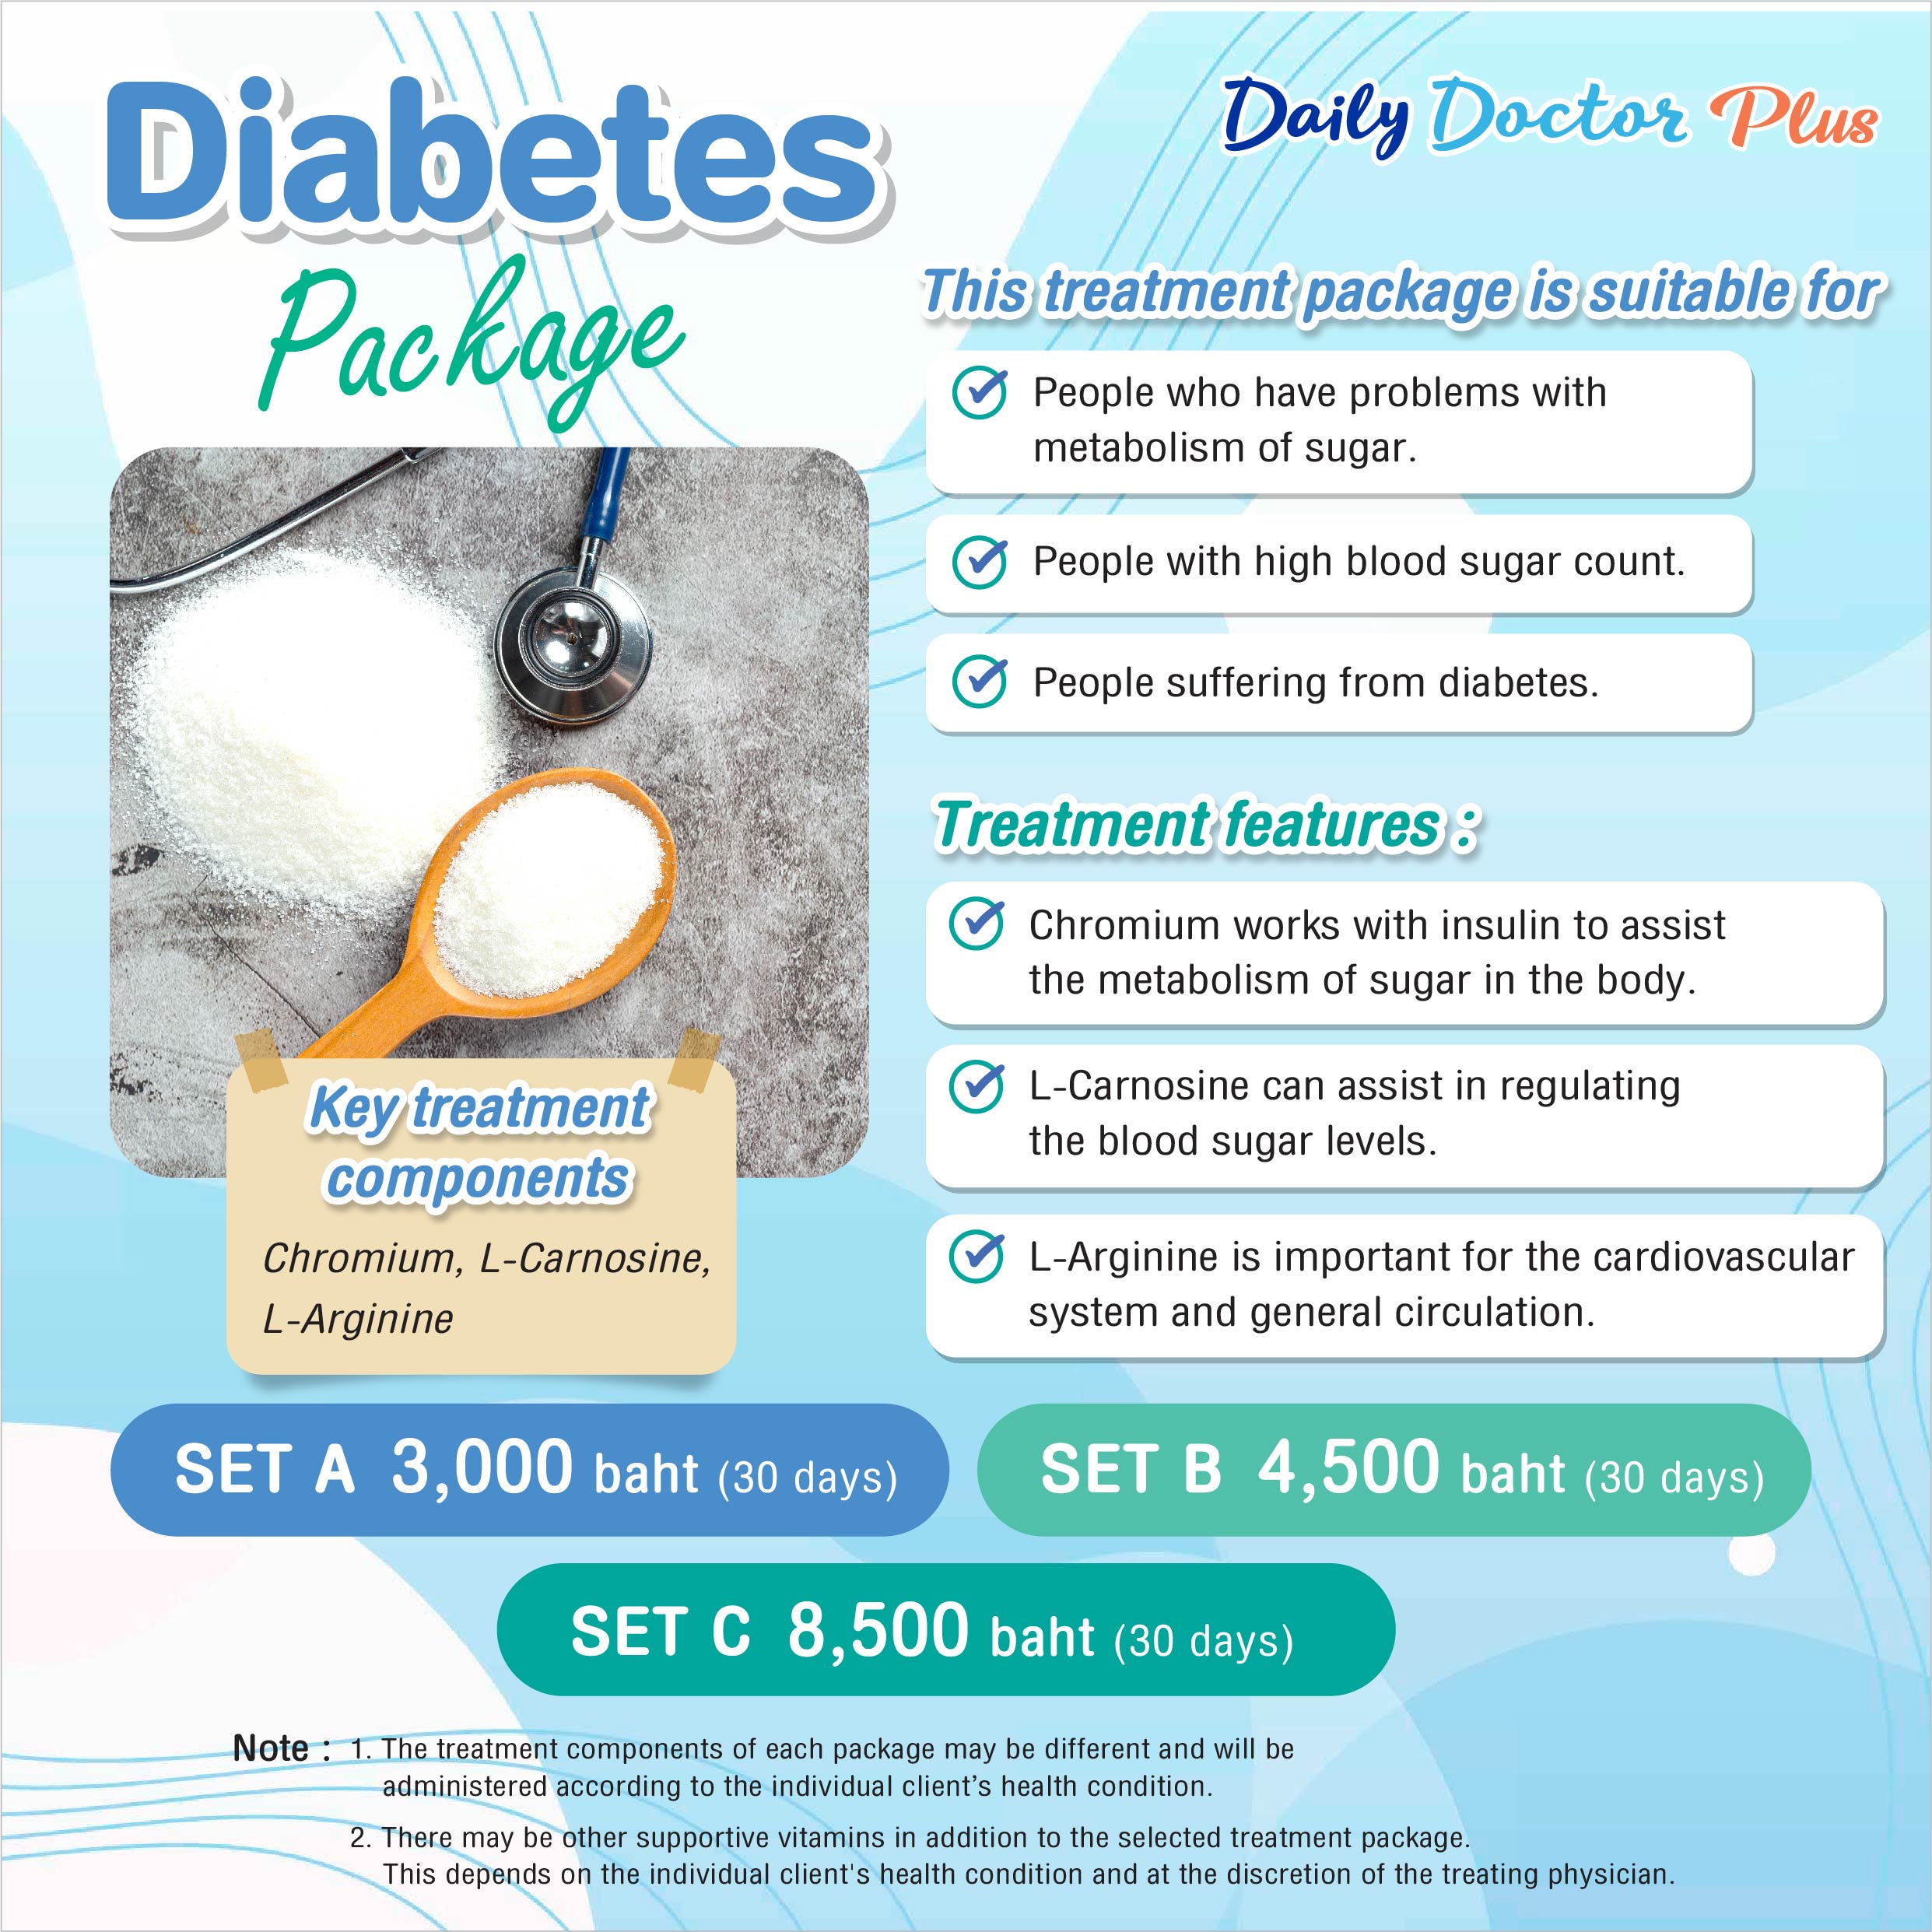 Daily Doctor Plus : Diabetes Package